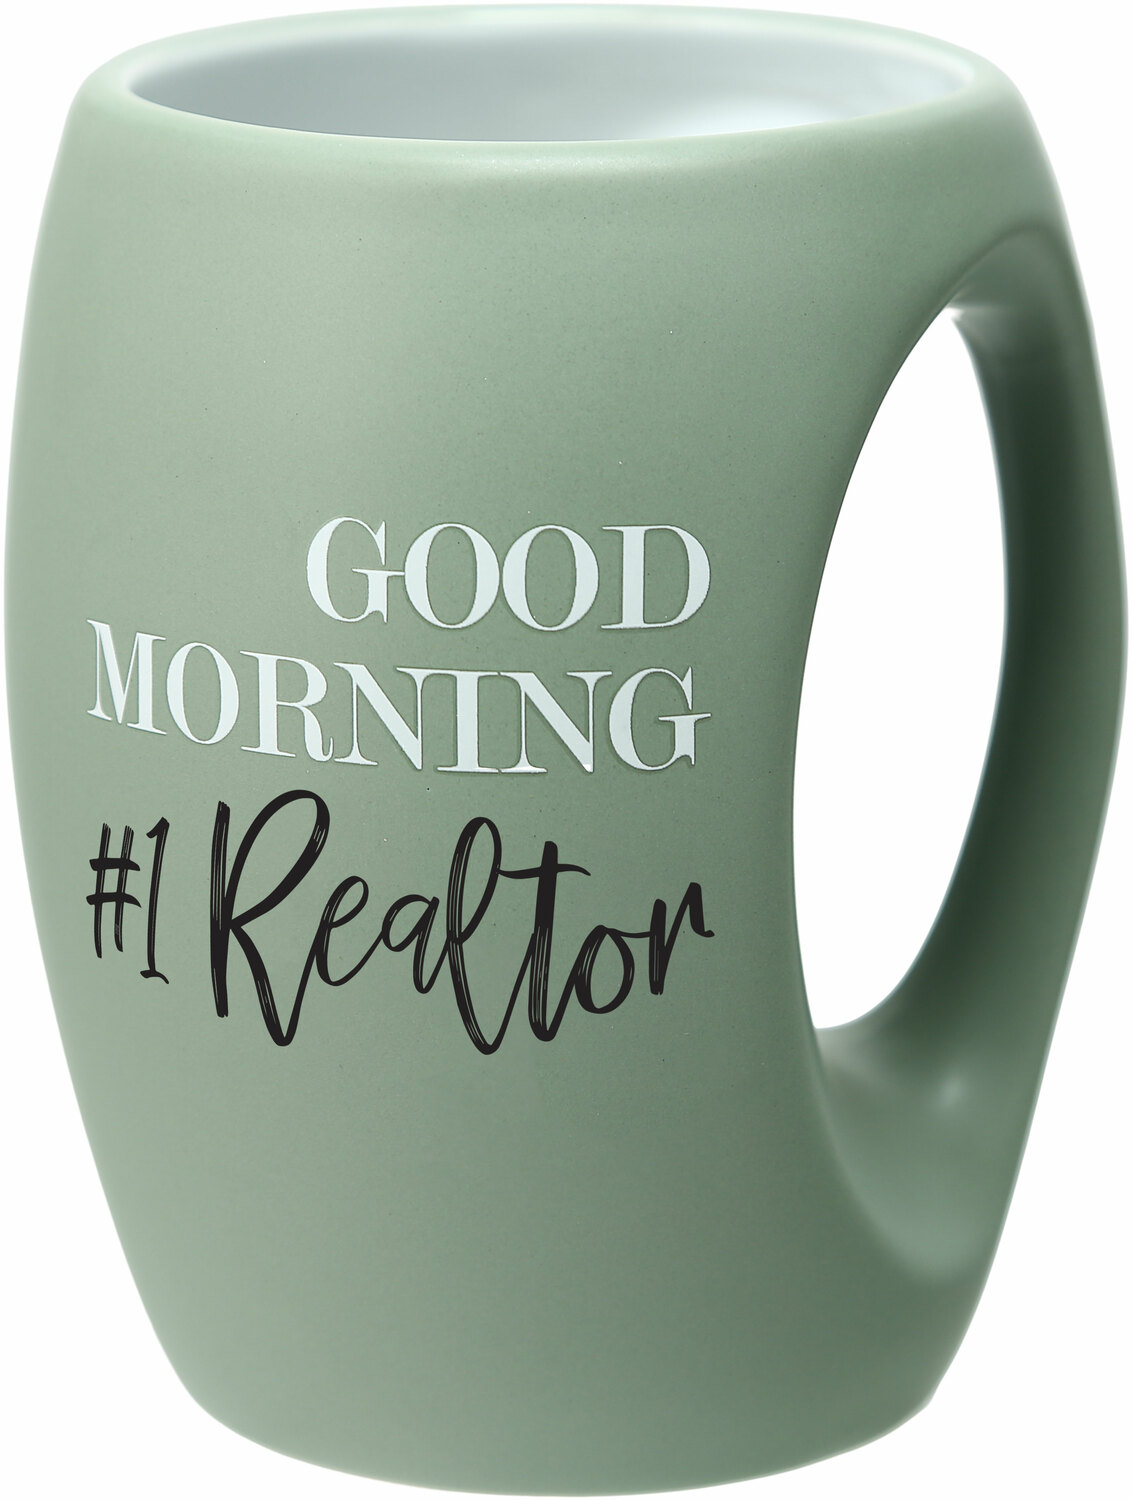 #1 Realtor by Good Morning - #1 Realtor - 16 oz Cup